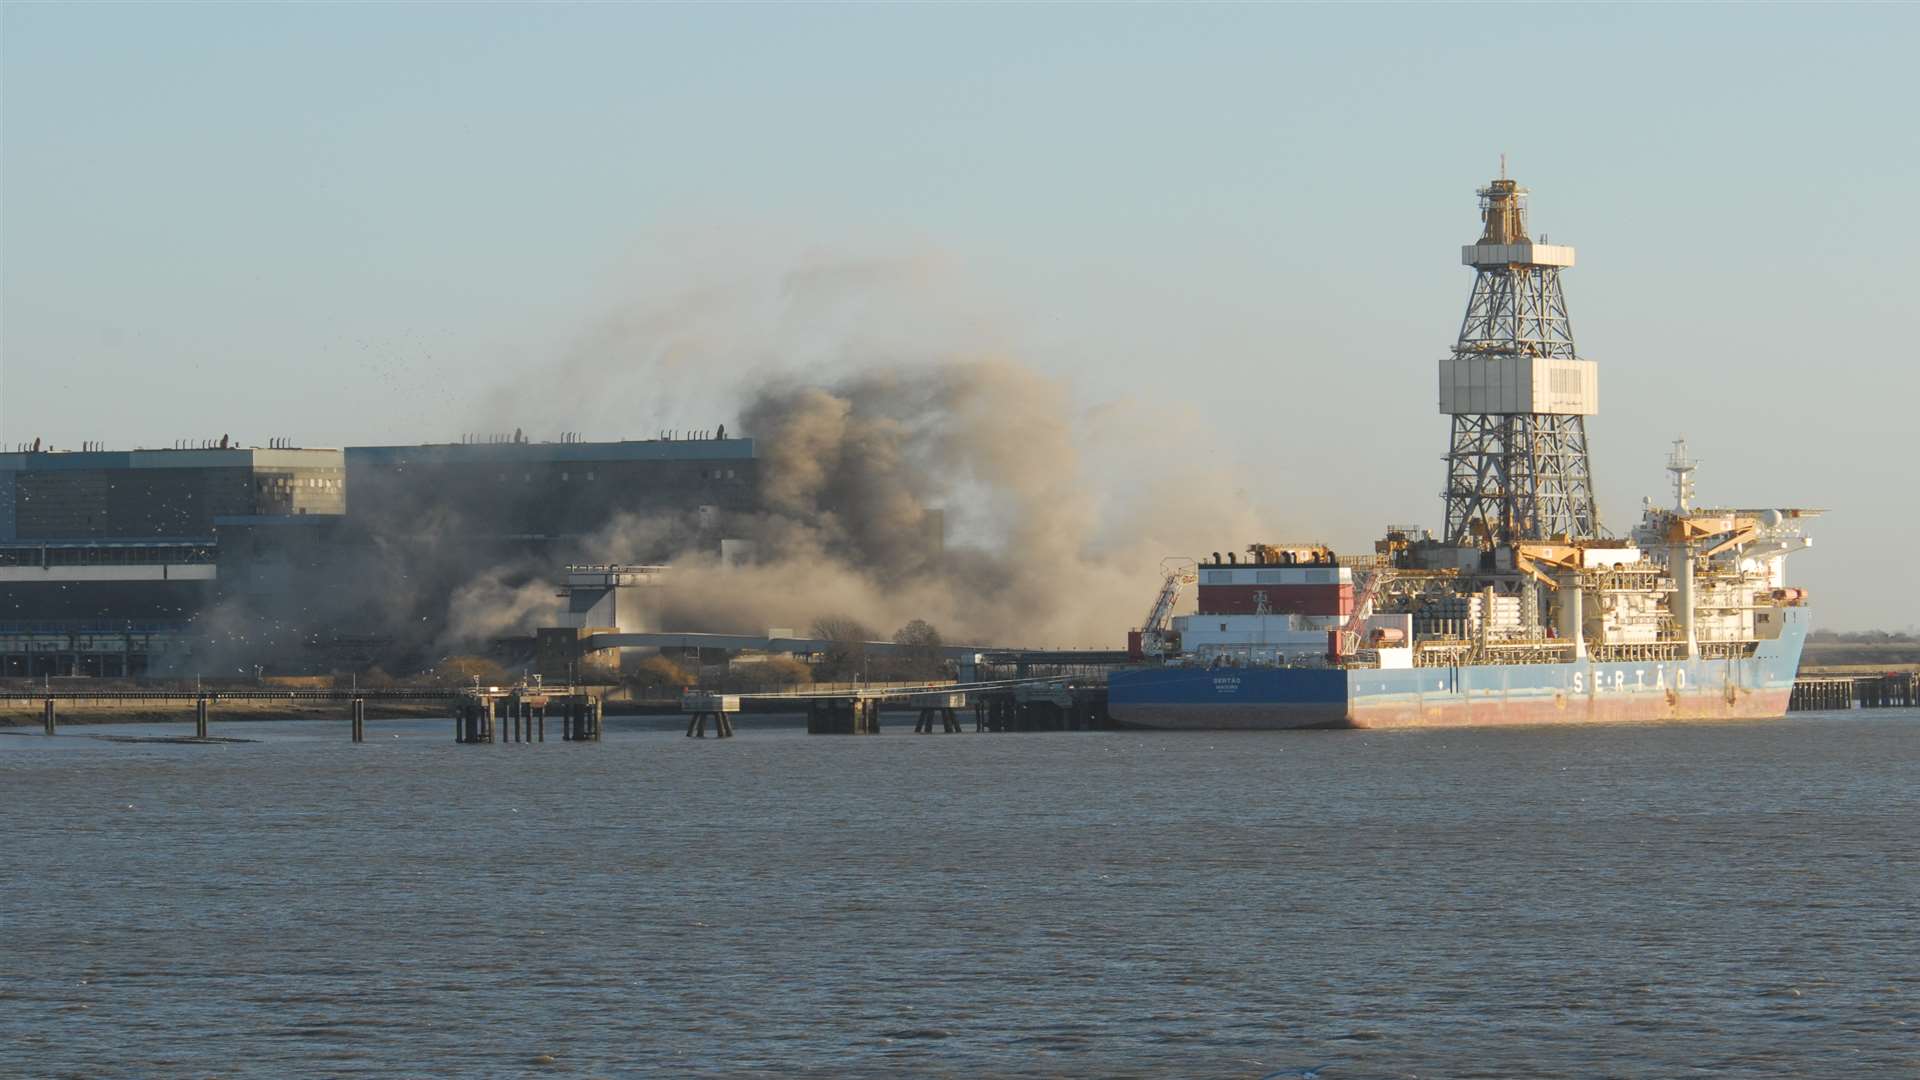 The ninth demolition at Tilbury. Picture: Fraser Gray